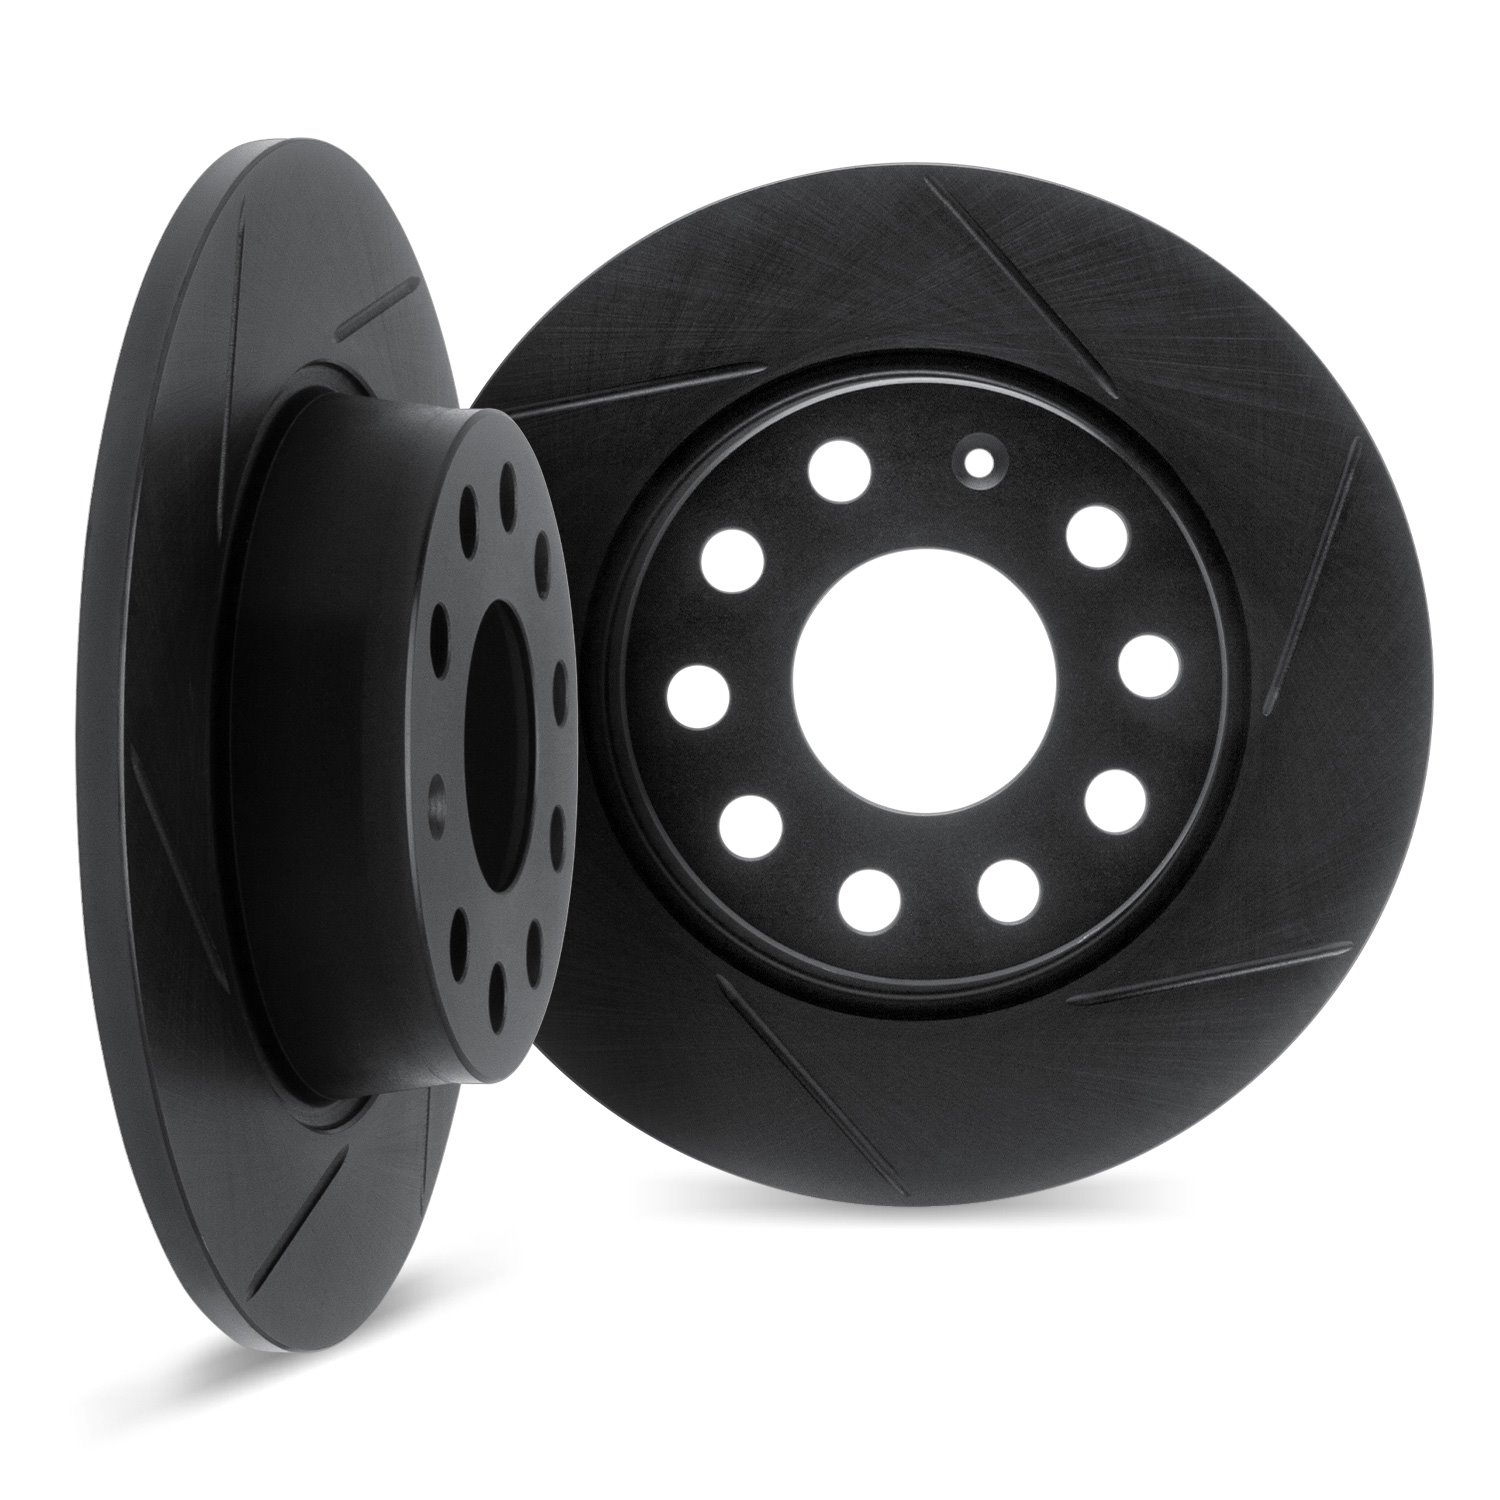 Slotted Brake Rotors [Black], Fits Select Multiple Makes/Models